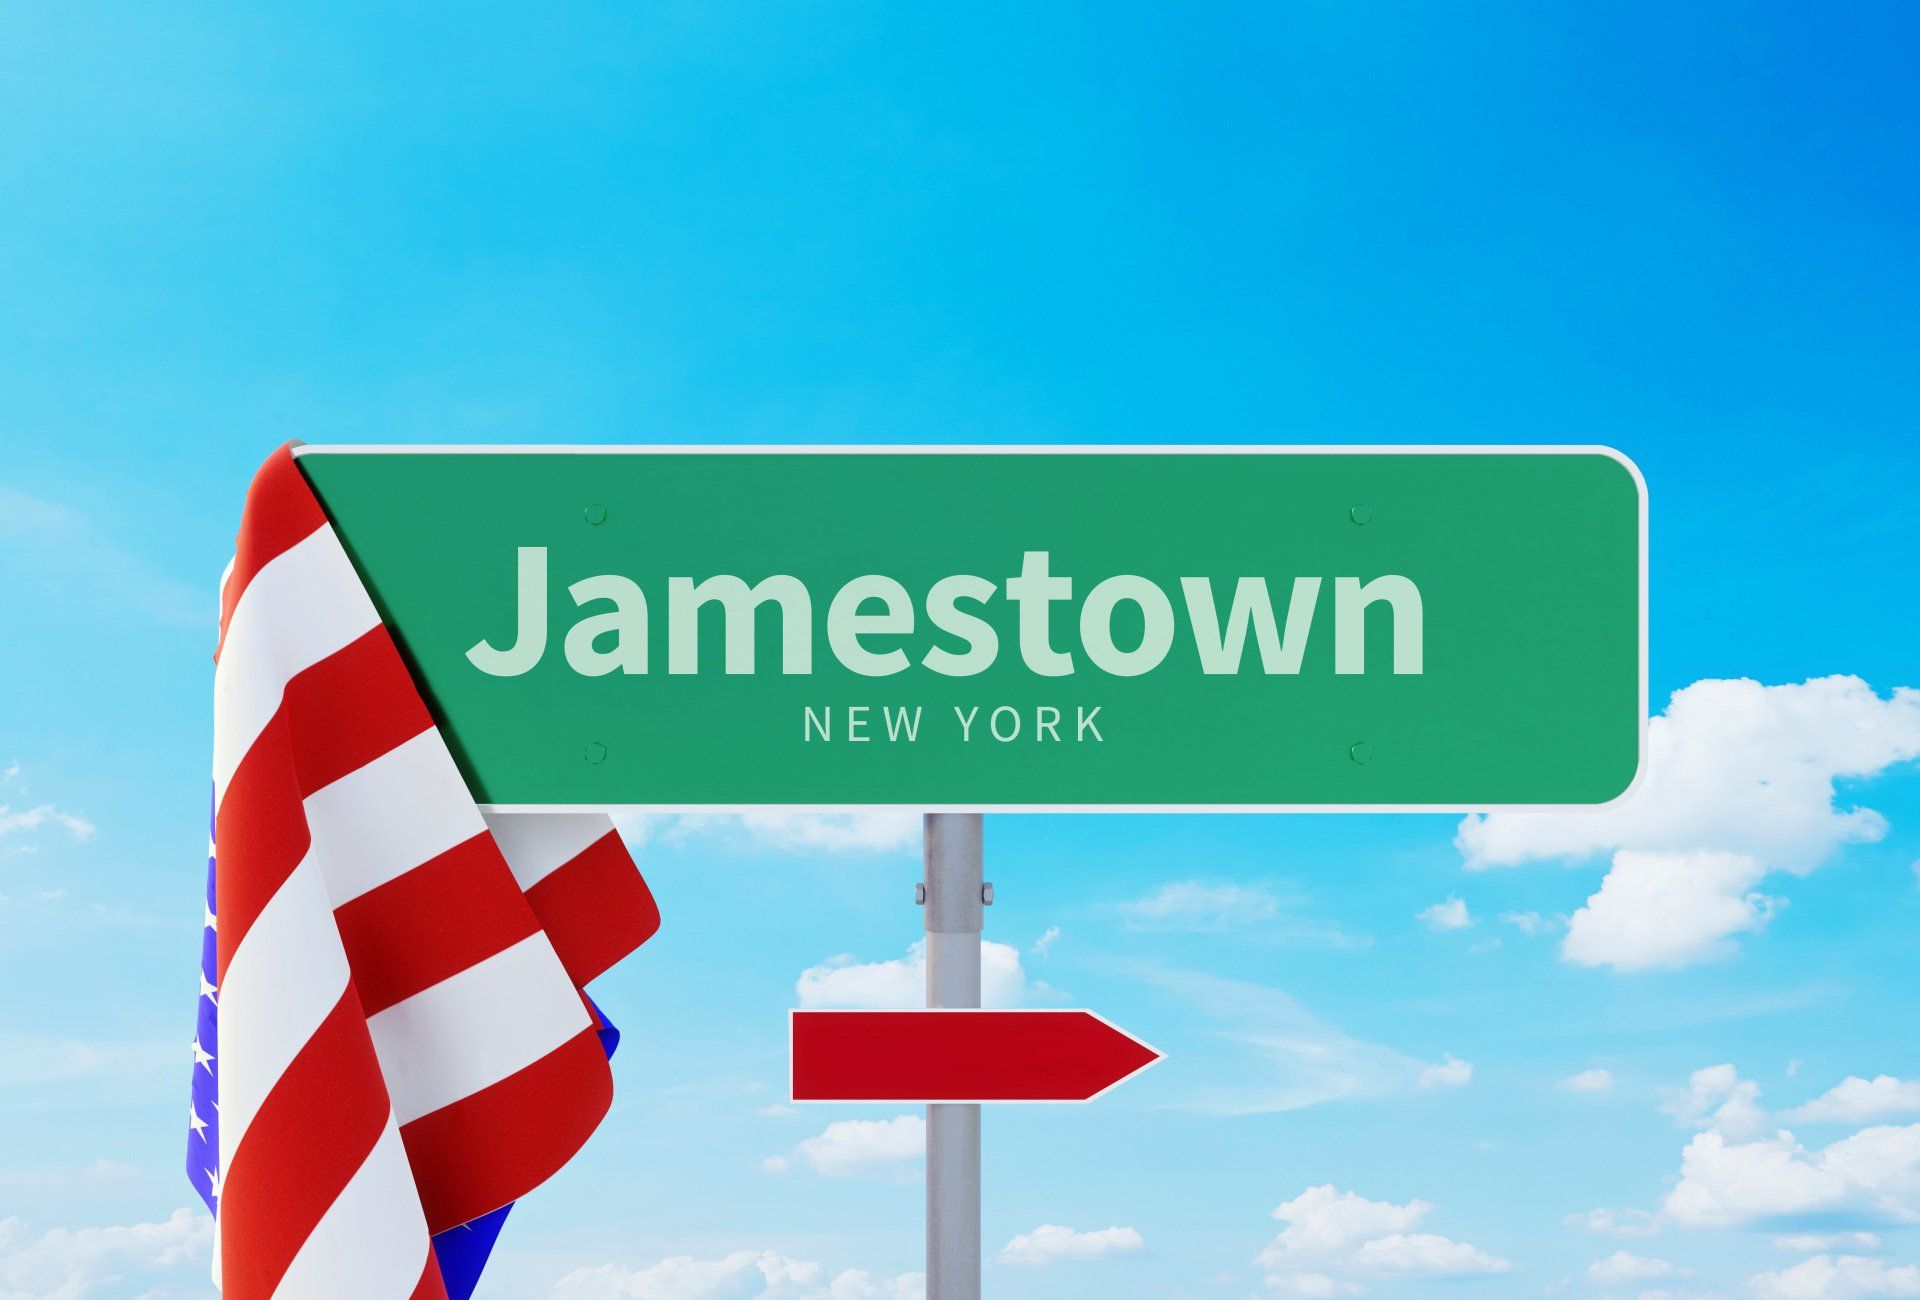 Jamestown New York sign